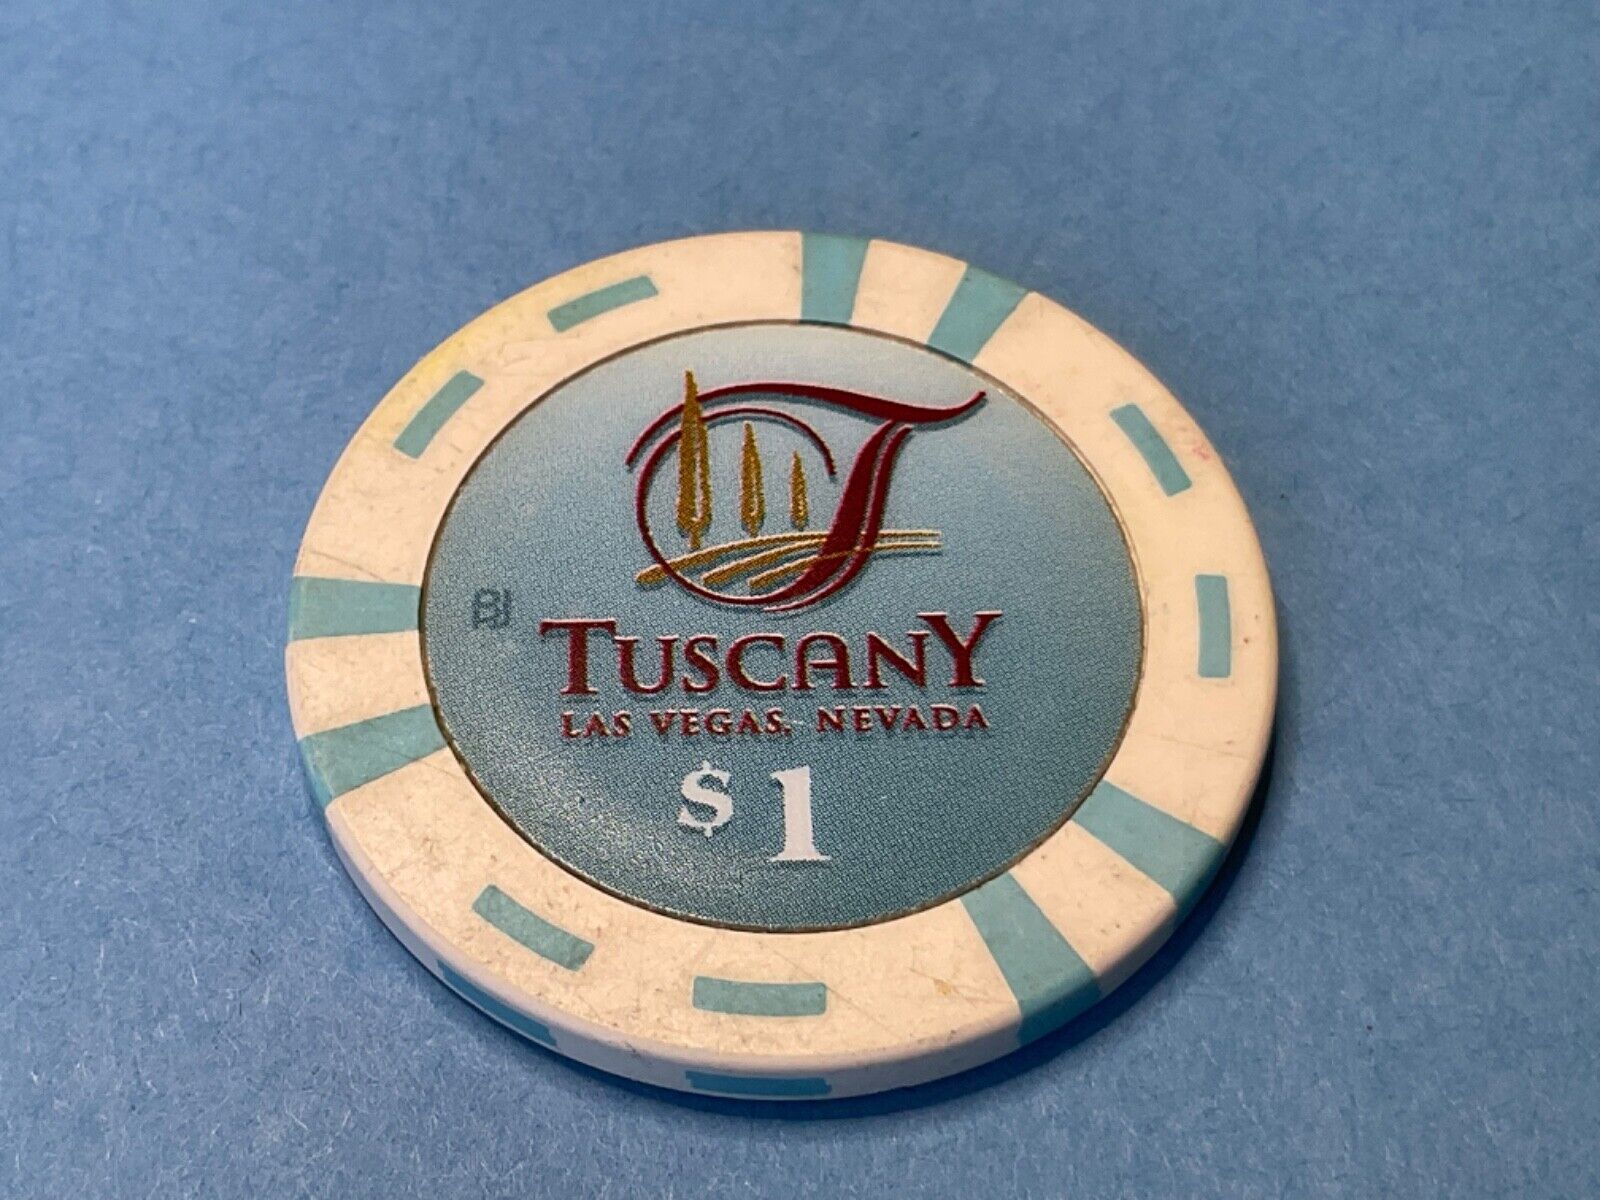 Tuscany Las Vegas Nevada  Casino Chip    $1. Chip O-67